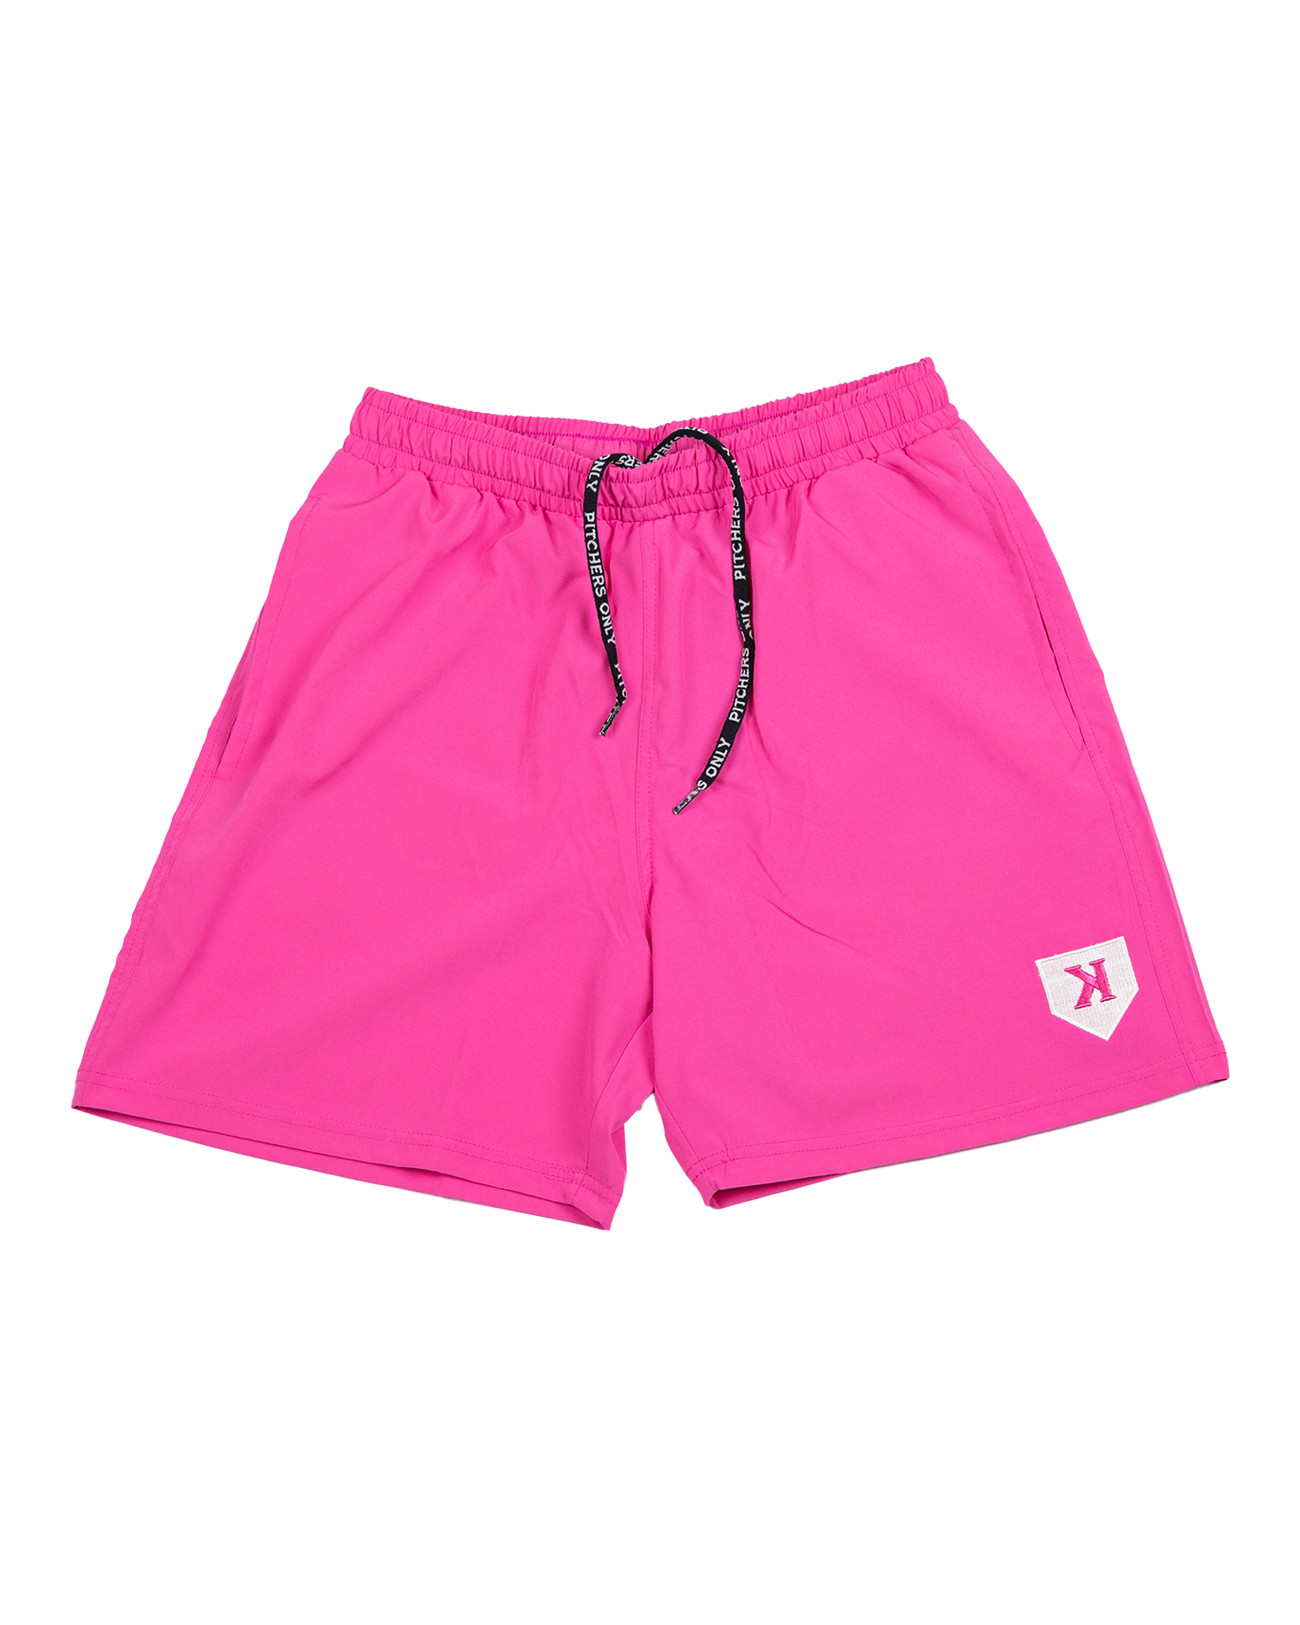 YOUTH Pink Training Shorts